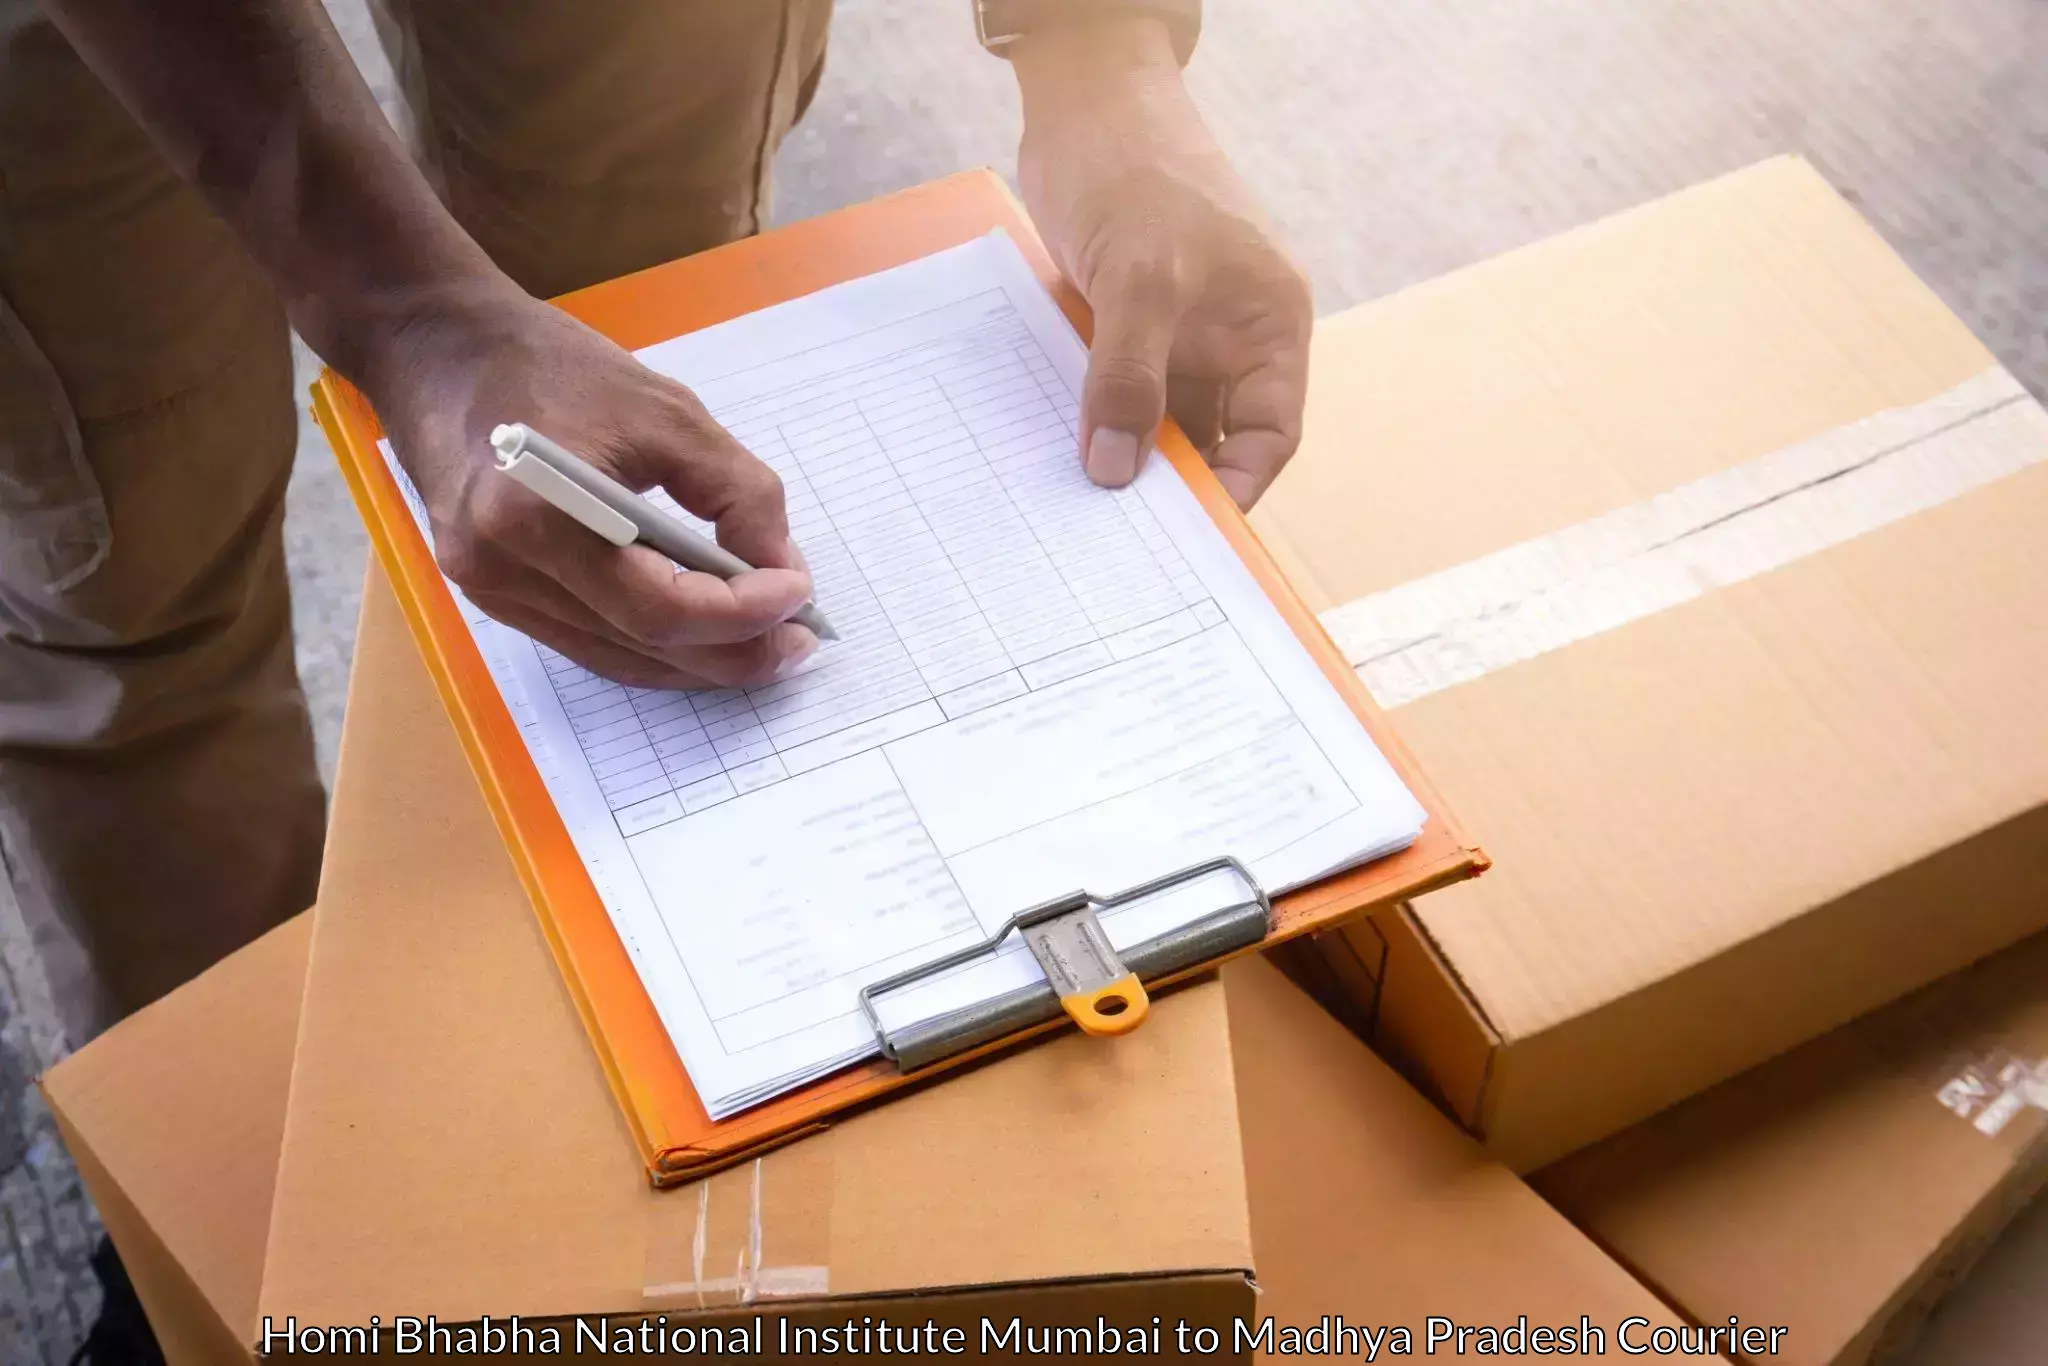 Efficient courier operations Homi Bhabha National Institute Mumbai to Indore